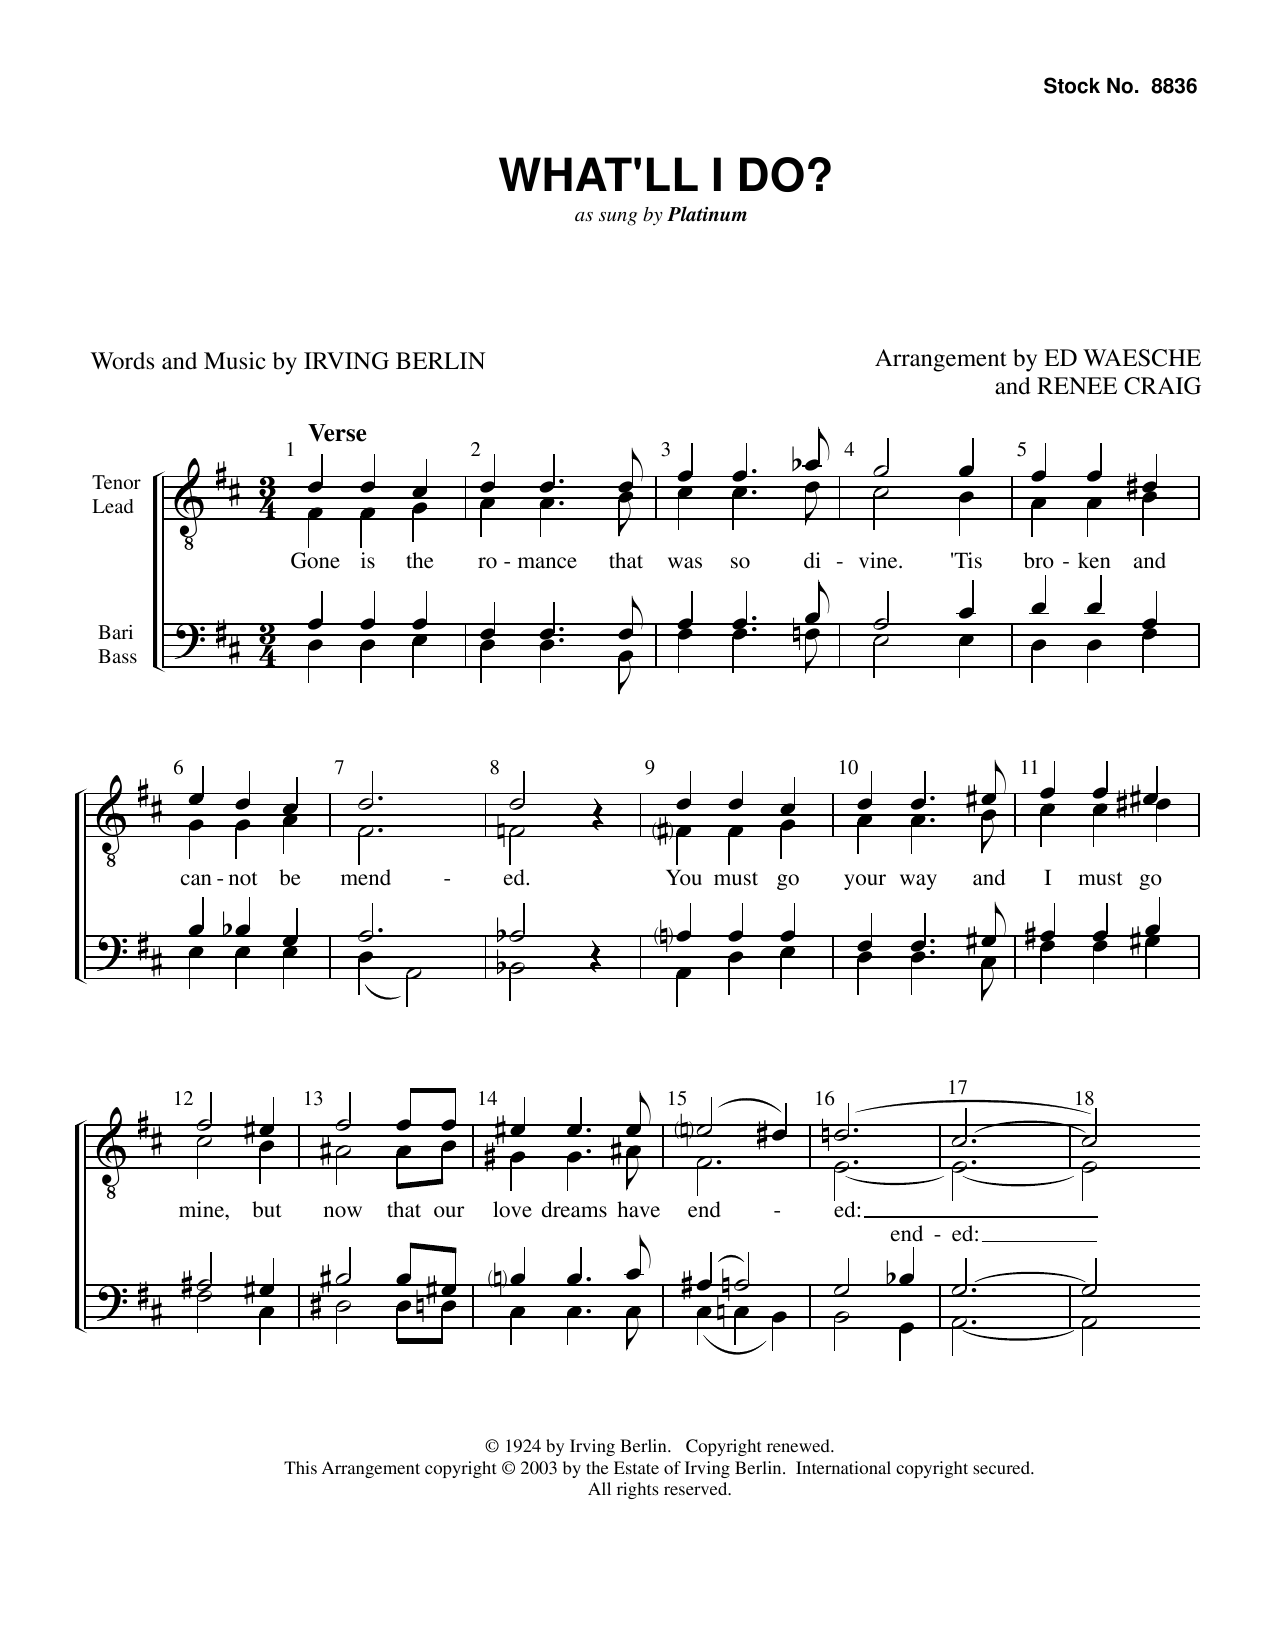 Download Platinum What'll I Do? (arr. Ed Waesche, Renee Craig) Sheet Music and learn how to play TTBB Choir PDF digital score in minutes